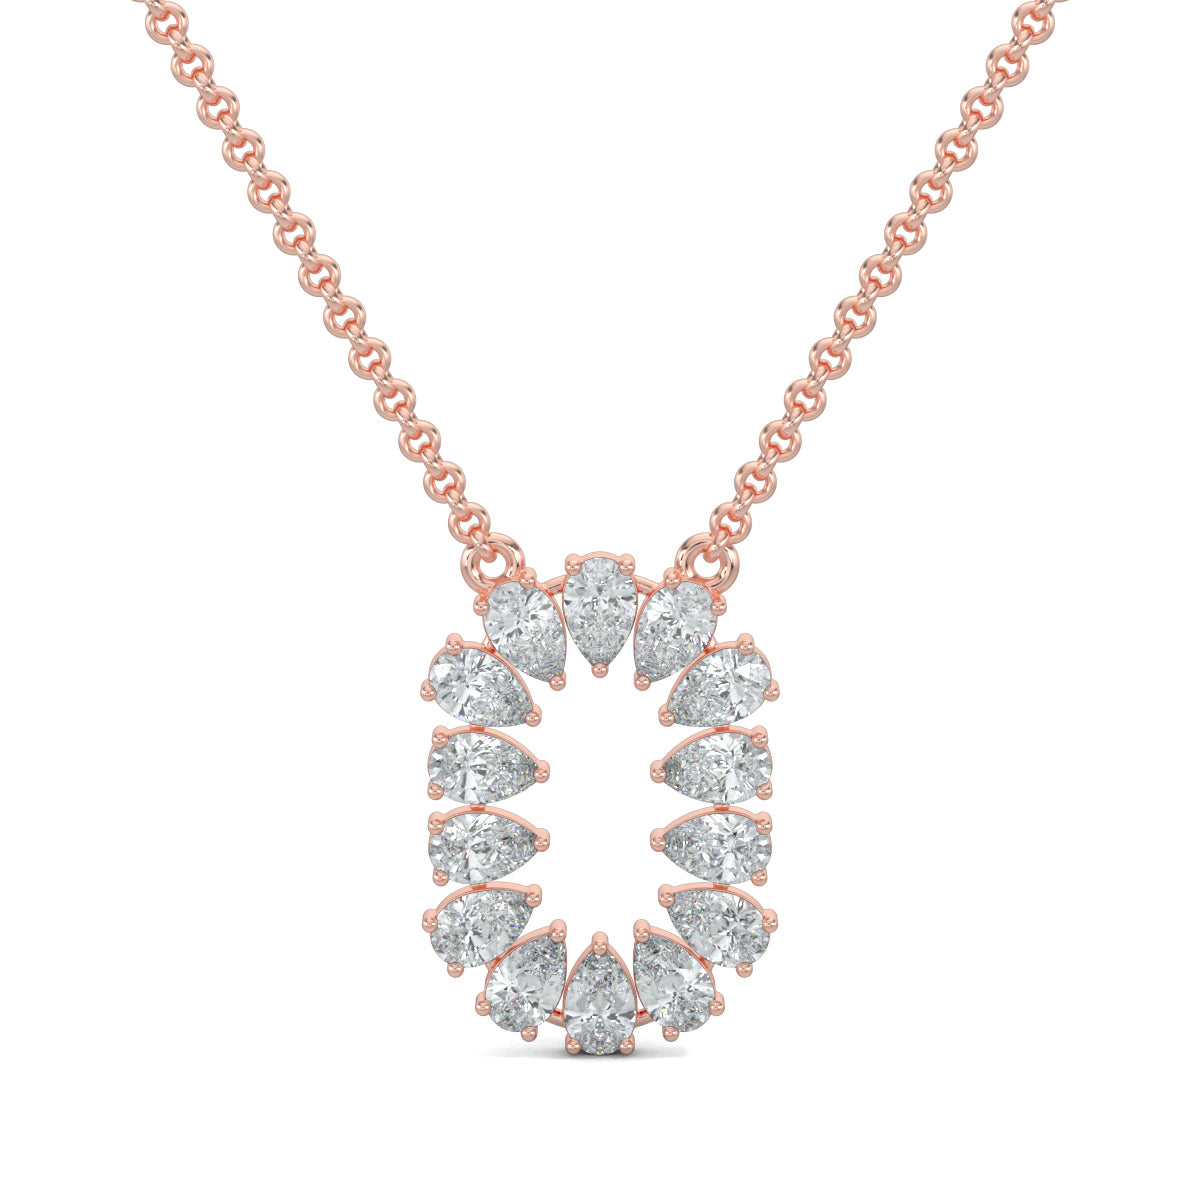 Rose Gold, Diamond Pendants, Solara Oval Glow pendant, natural diamonds, lab-grown diamonds, casual pendant, pear diamonds, oval-shaped pendant, elegant jewelry, radiant glow